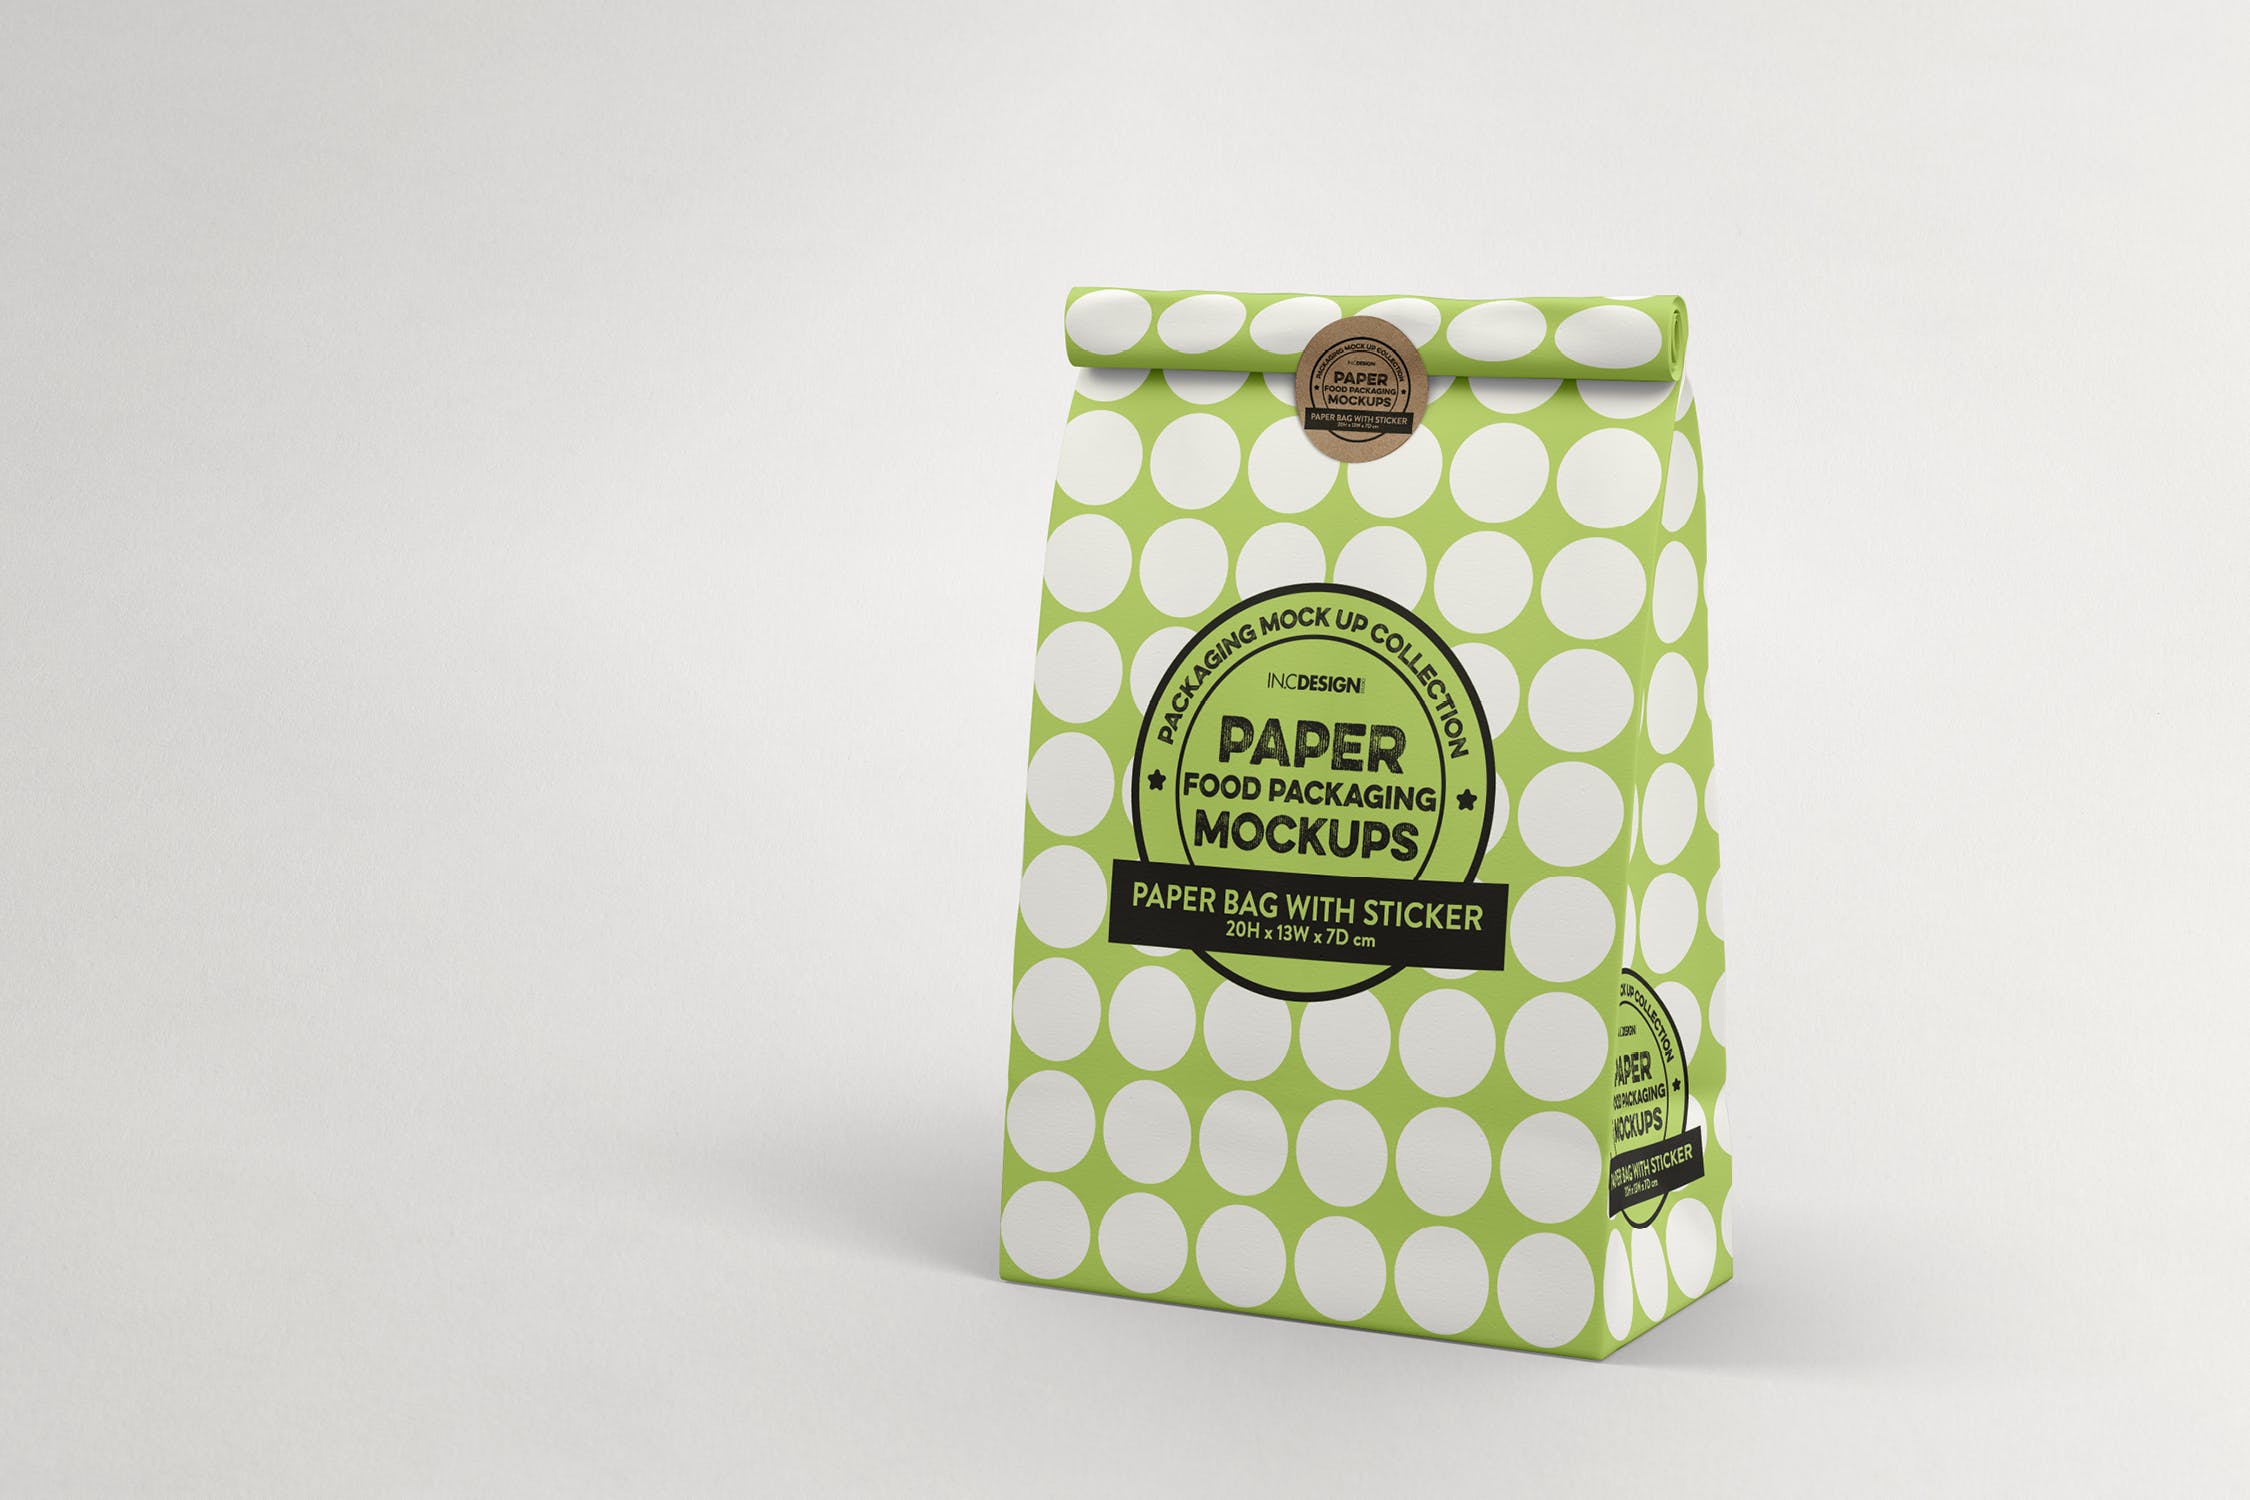 贴纸密封包装纸袋设计效果图蚂蚁素材精选 Paper Bag with sticker Seal Packaging Mockup插图(2)